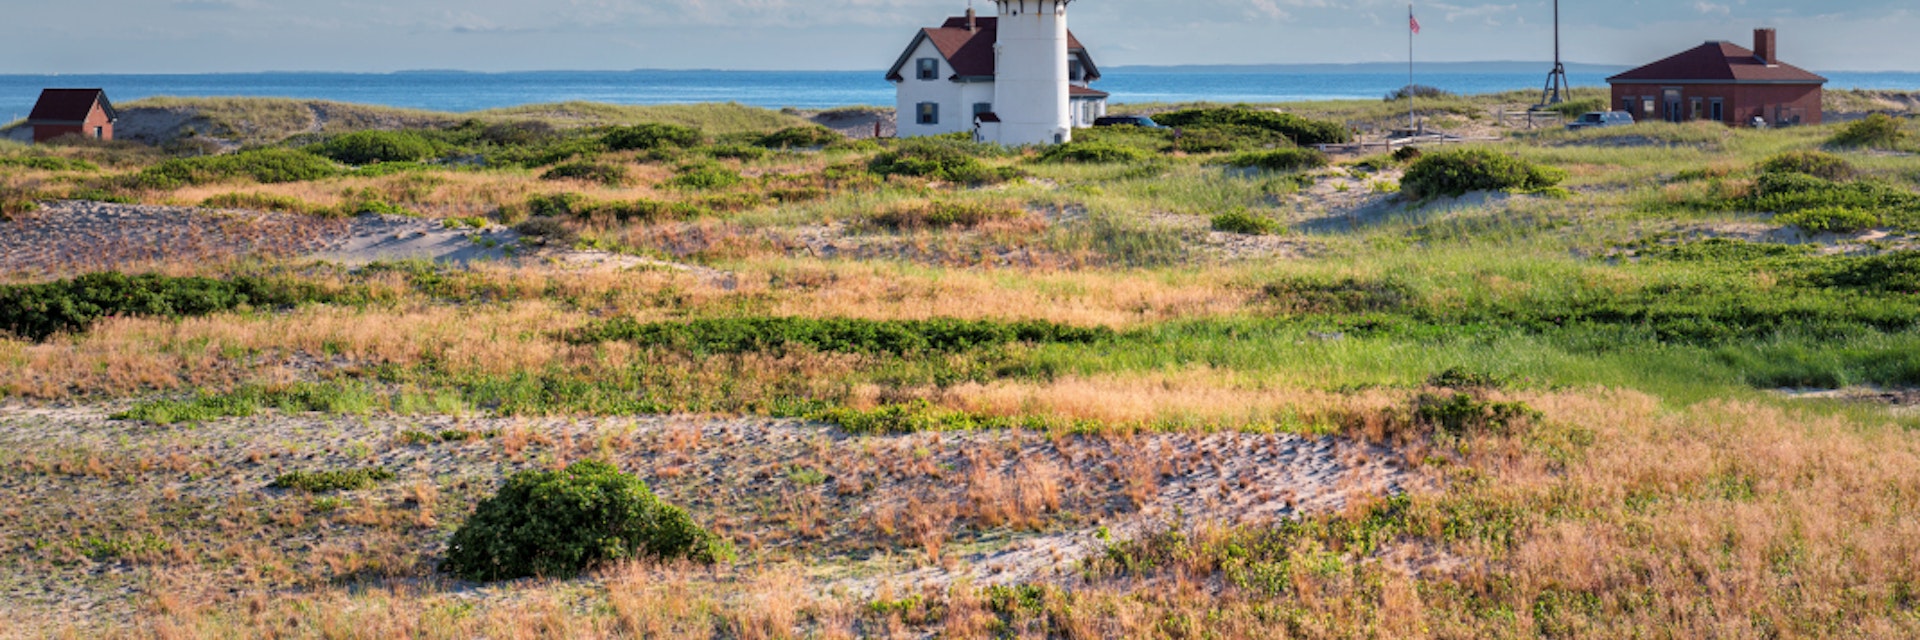 Race Point Light Lighthouse in sand dunes on the beach at Cape Cod, New England,  Massachusetts, USA.